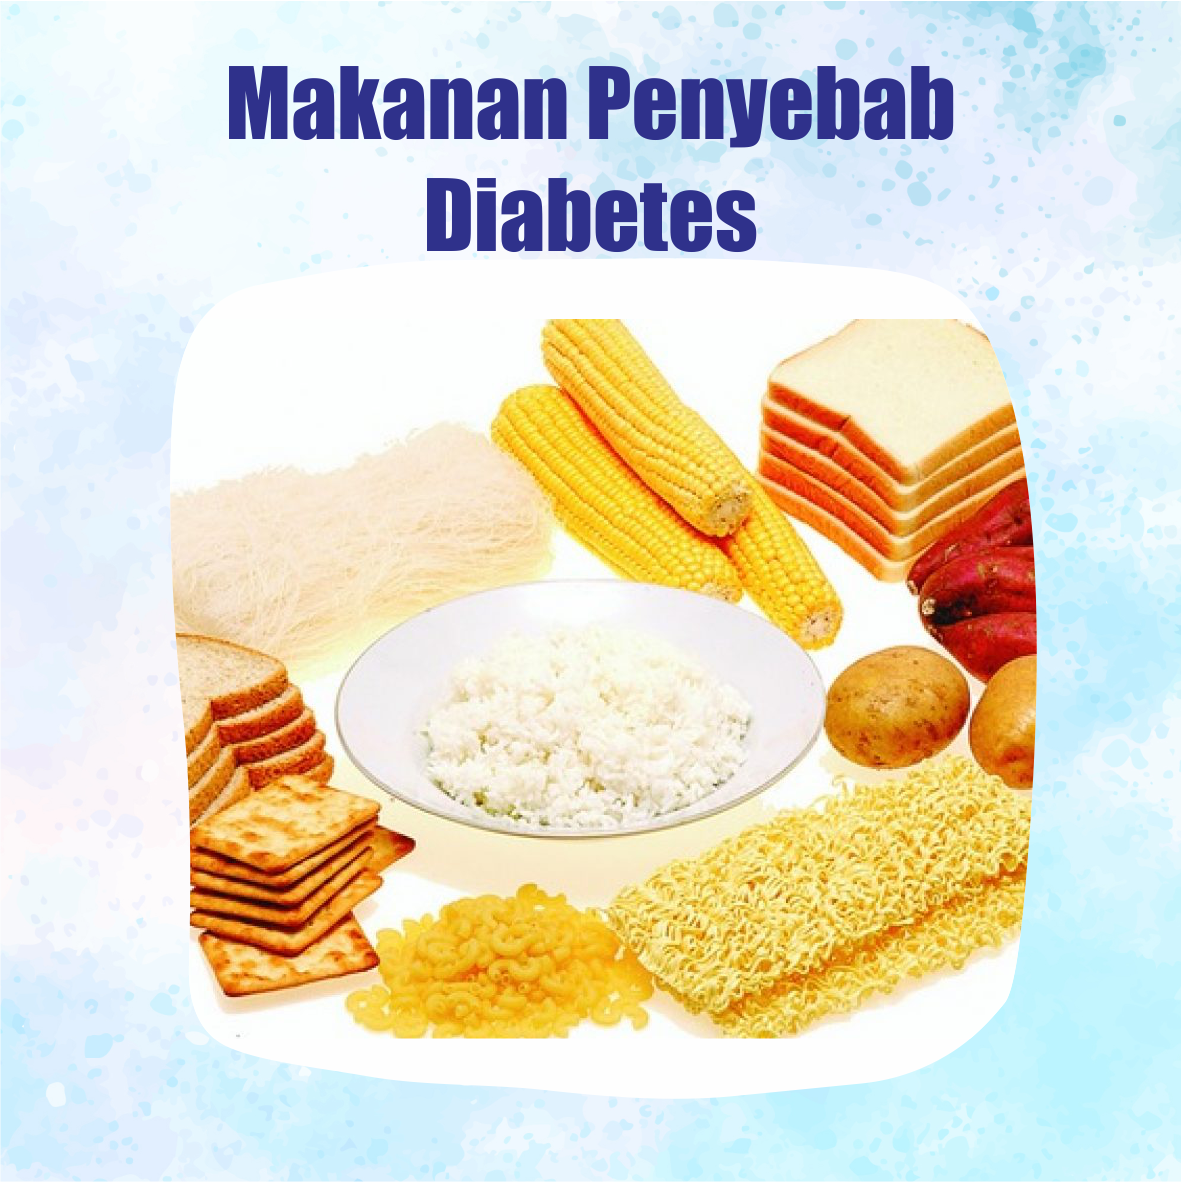 Copy of Makanan penyebab diabetes 1